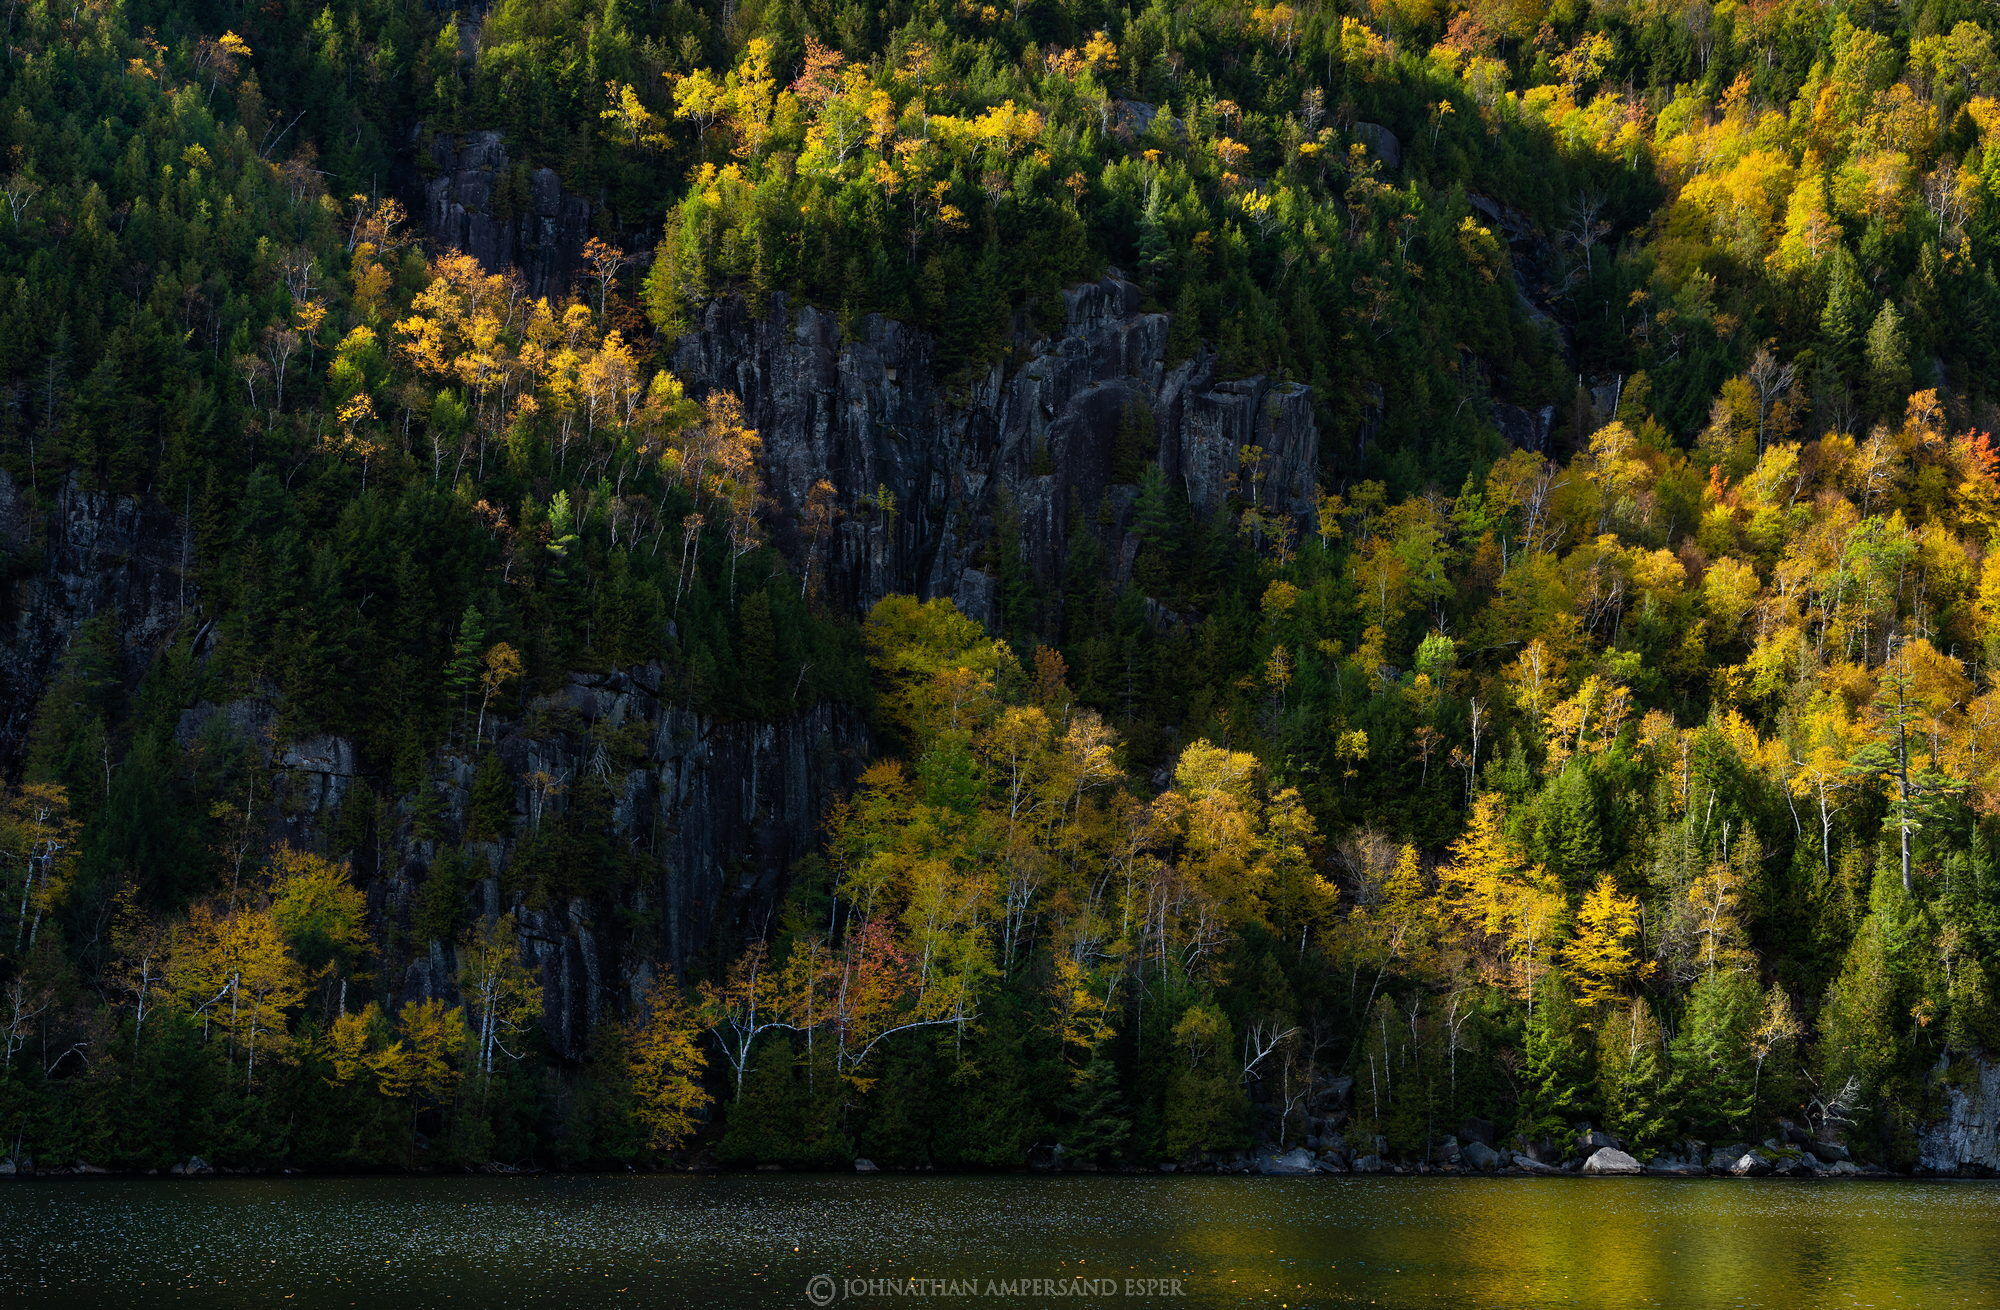 Adirondack Park, Adirondacks, Johnathan Esper, Wildernesscapes Photography,Chapel Pond,Chapel Pond cliffs,cliffs,birches,yellow...